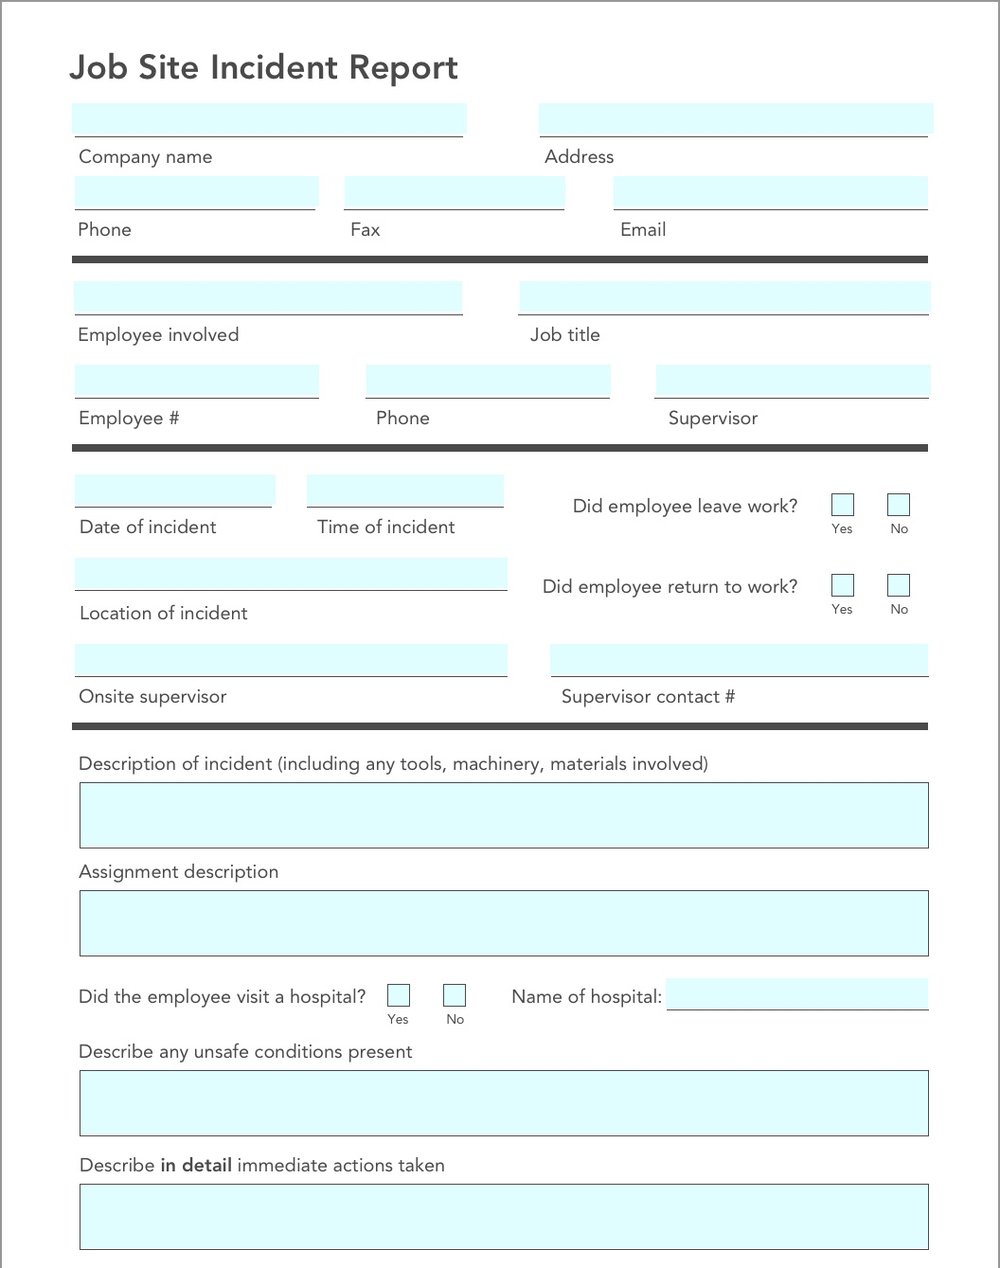 Spotlight Form: The Digital Job Site Incident Report - GoFormz With Regard To Employee Incident Report Templates